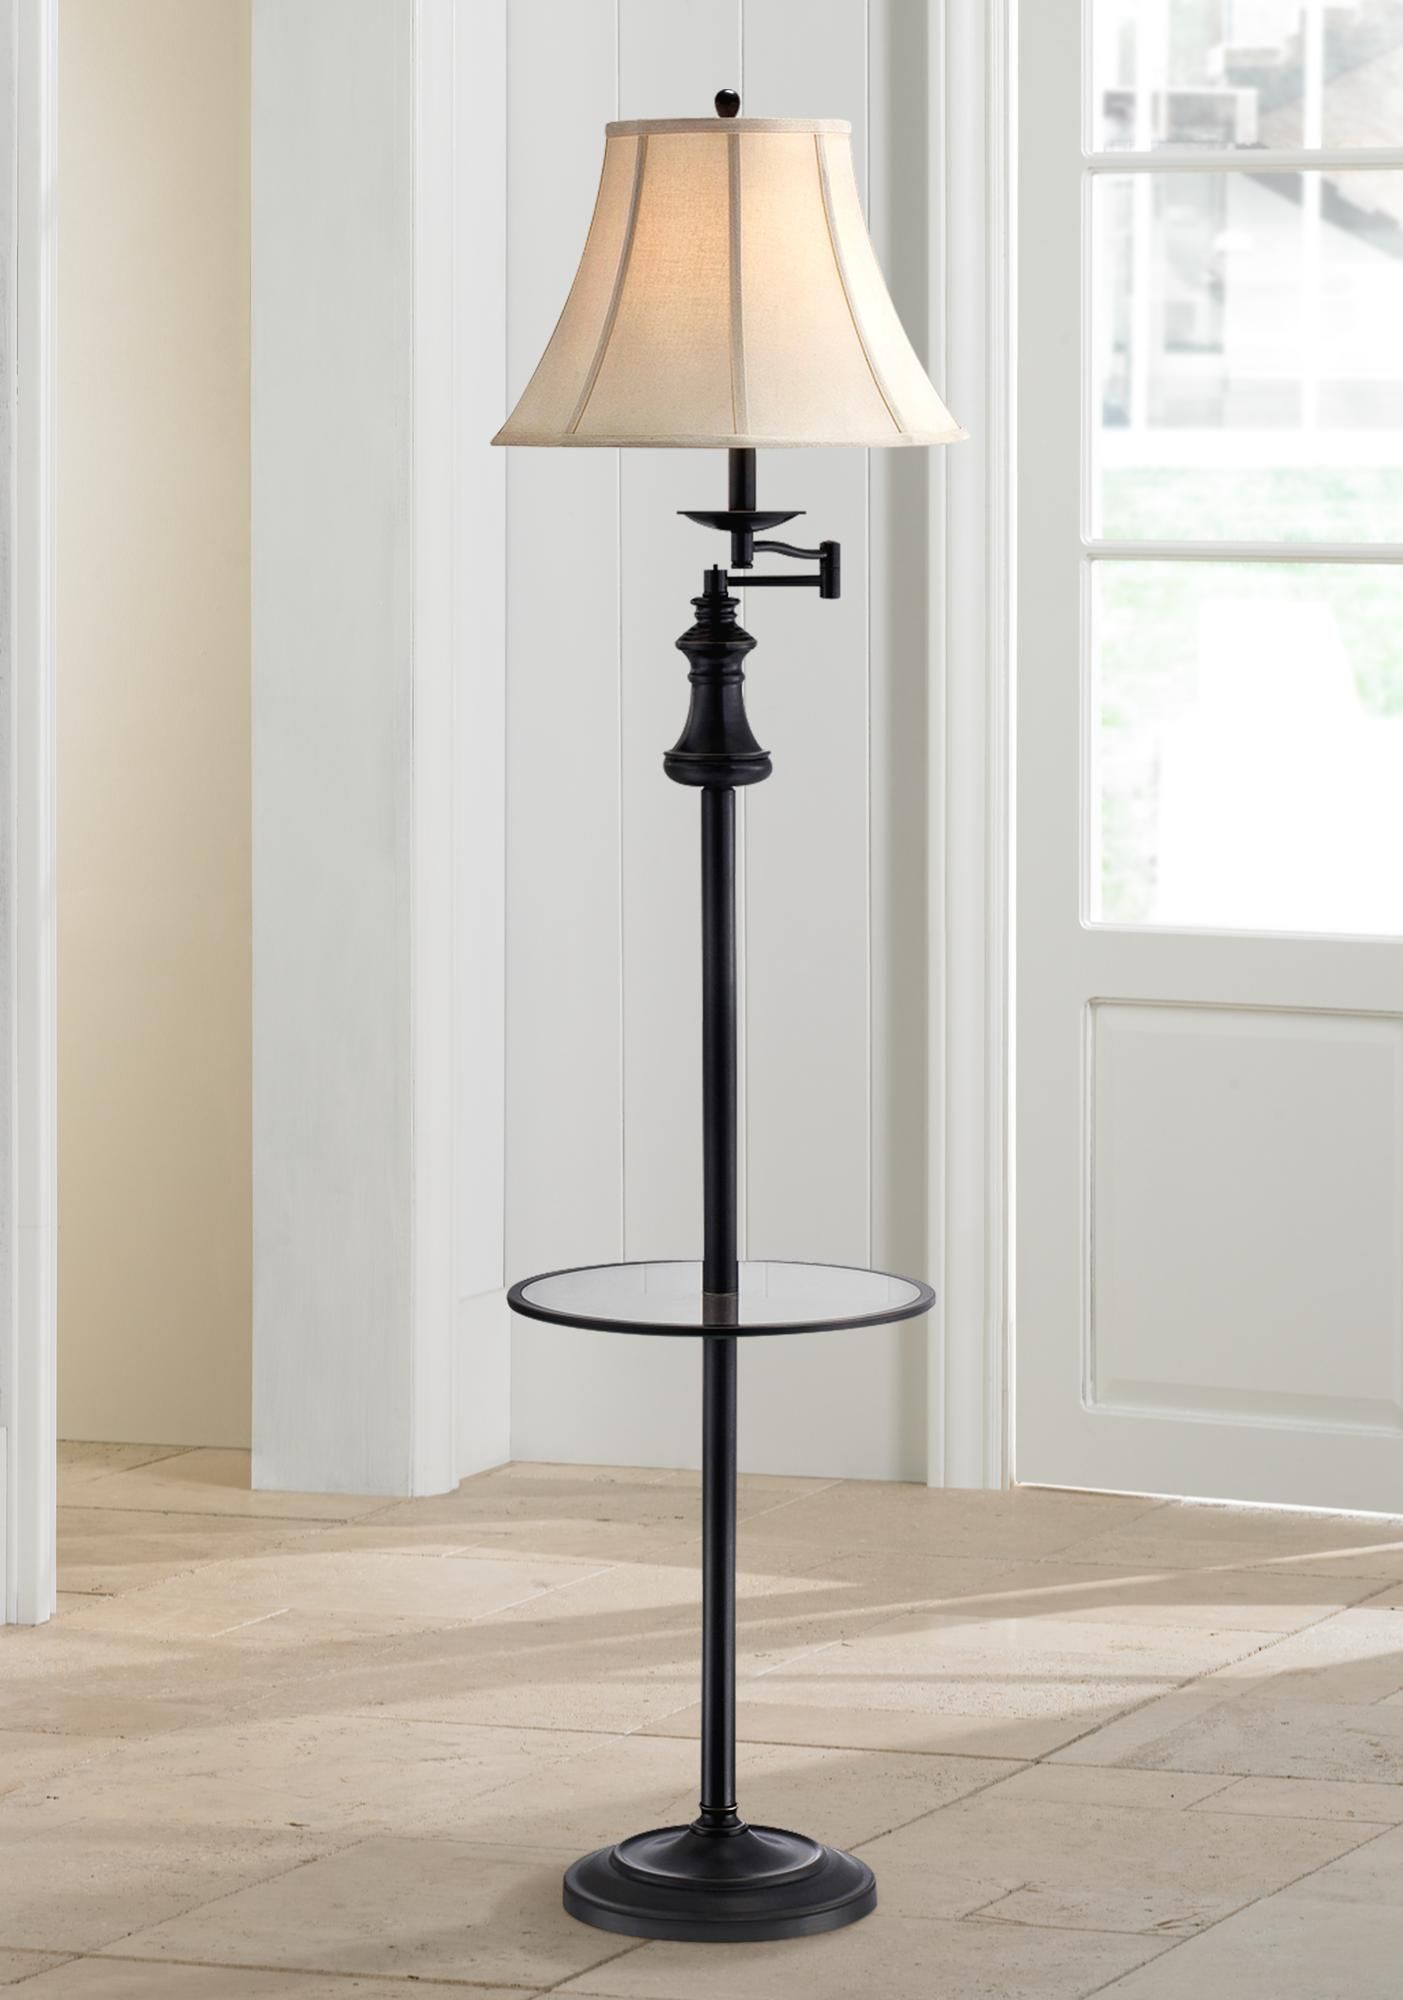 Lite Source Brandice Swing Arm Floor Lamp With Table Tray regarding dimensions 1403 X 2000